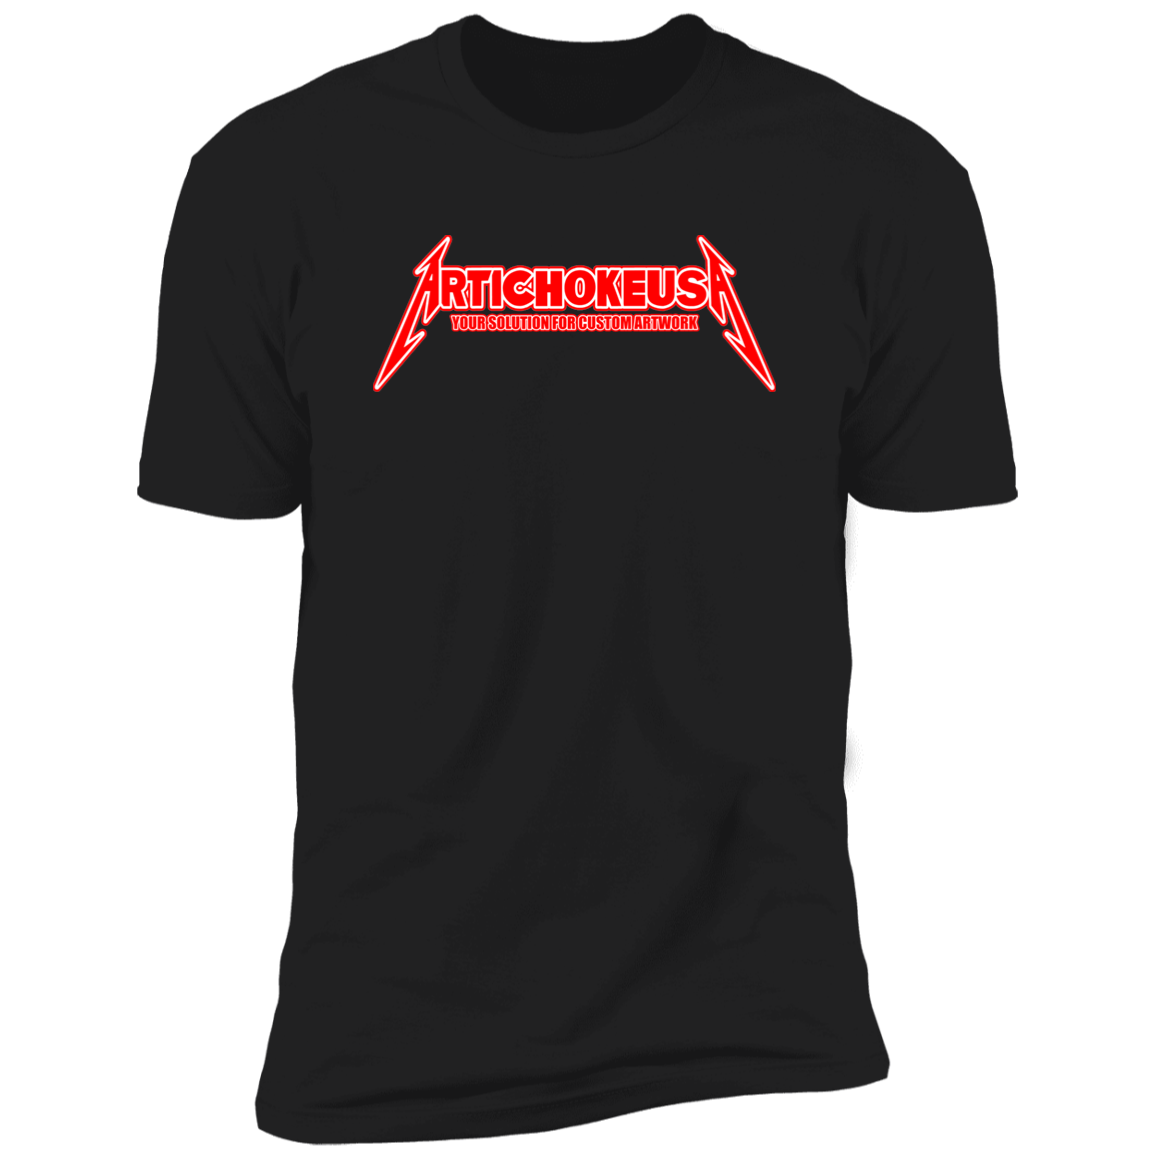 ArtichokeUSA Custom Design. Metallica Style Logo. Let's Make One For Your Project. Men's Premium Short Sleeve T-Shirt